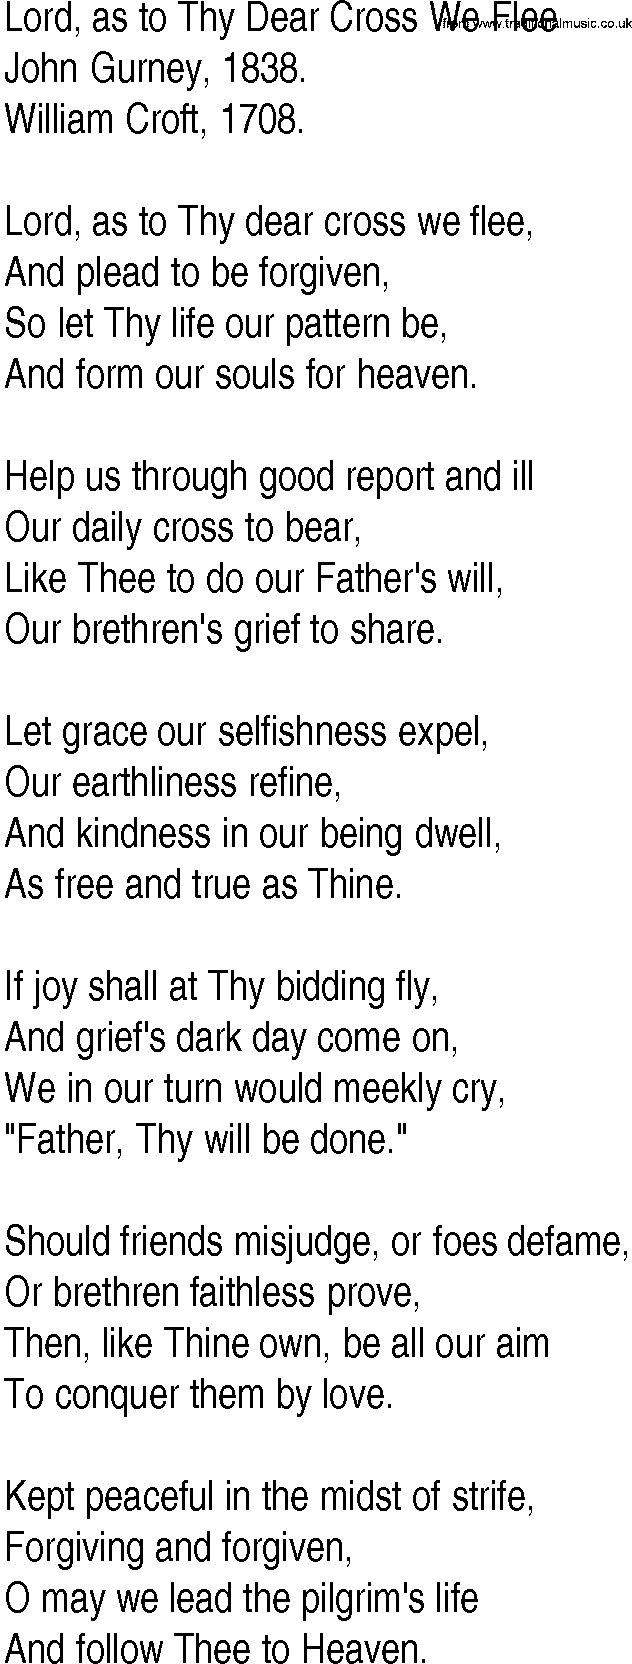 Hymn and Gospel Song: Lord, as to Thy Dear Cross We Flee by John Gurney lyrics